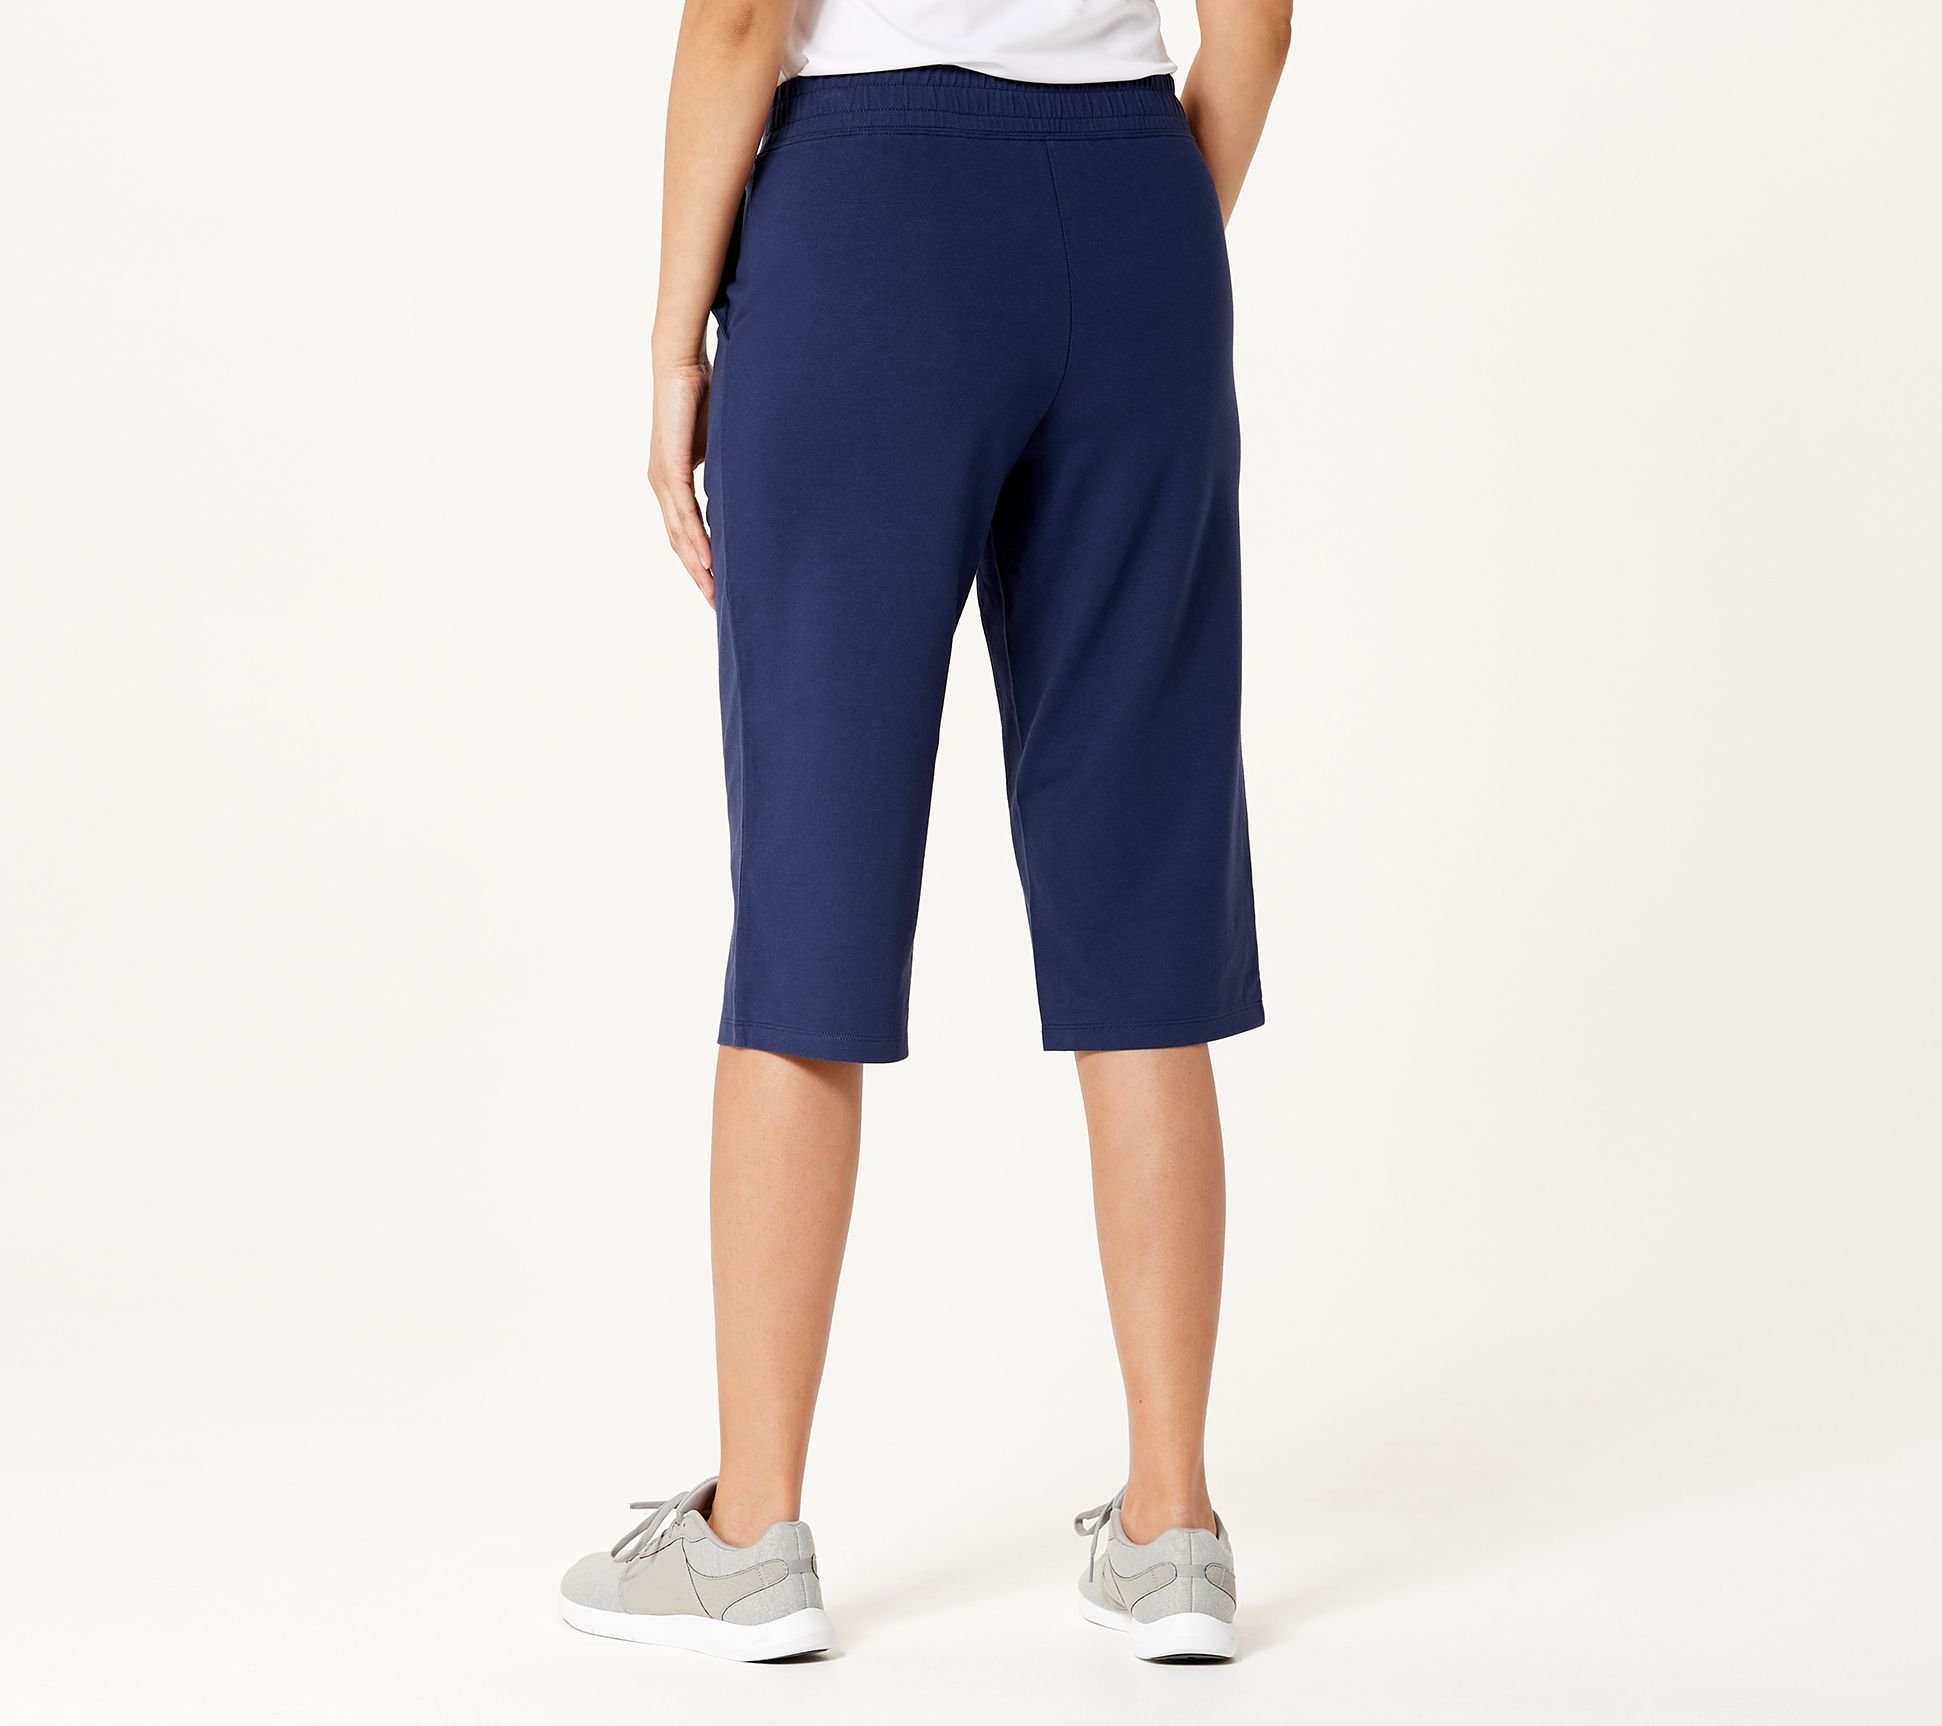 Denim&Co, Pants & Jumpsuits, Denim Co Petite Leggings Pm Active Duo  Stretch Printed Crop Gray A47335